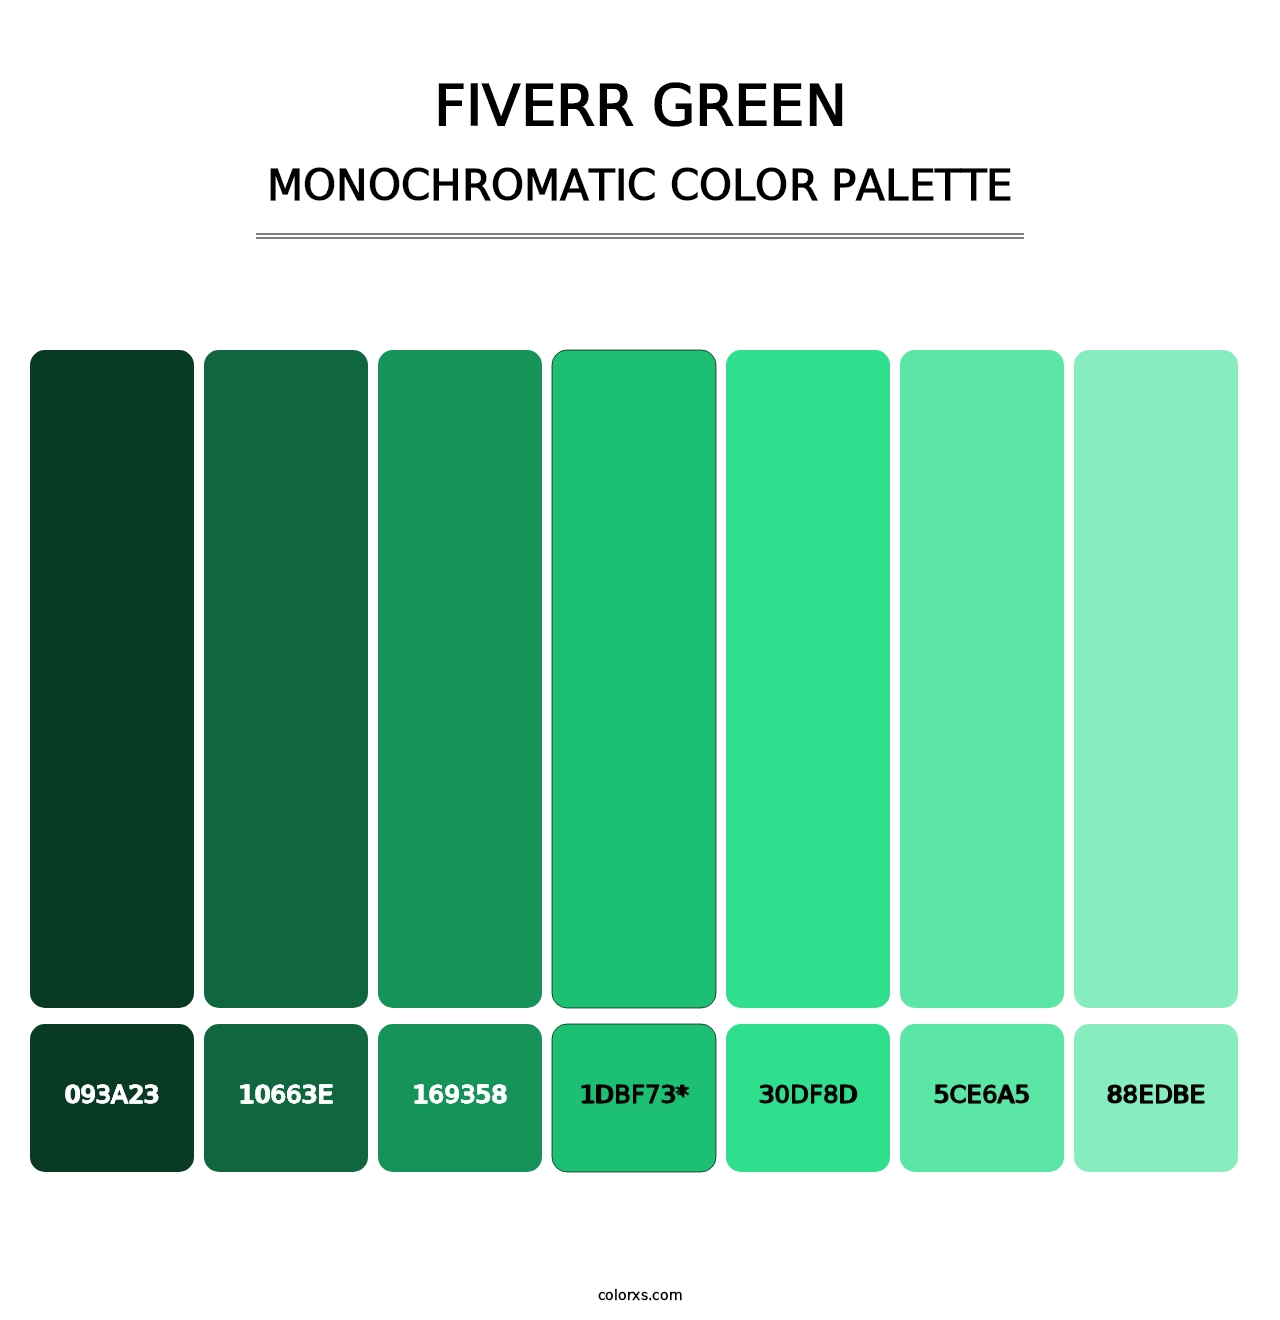 Fiverr Green - Monochromatic Color Palette